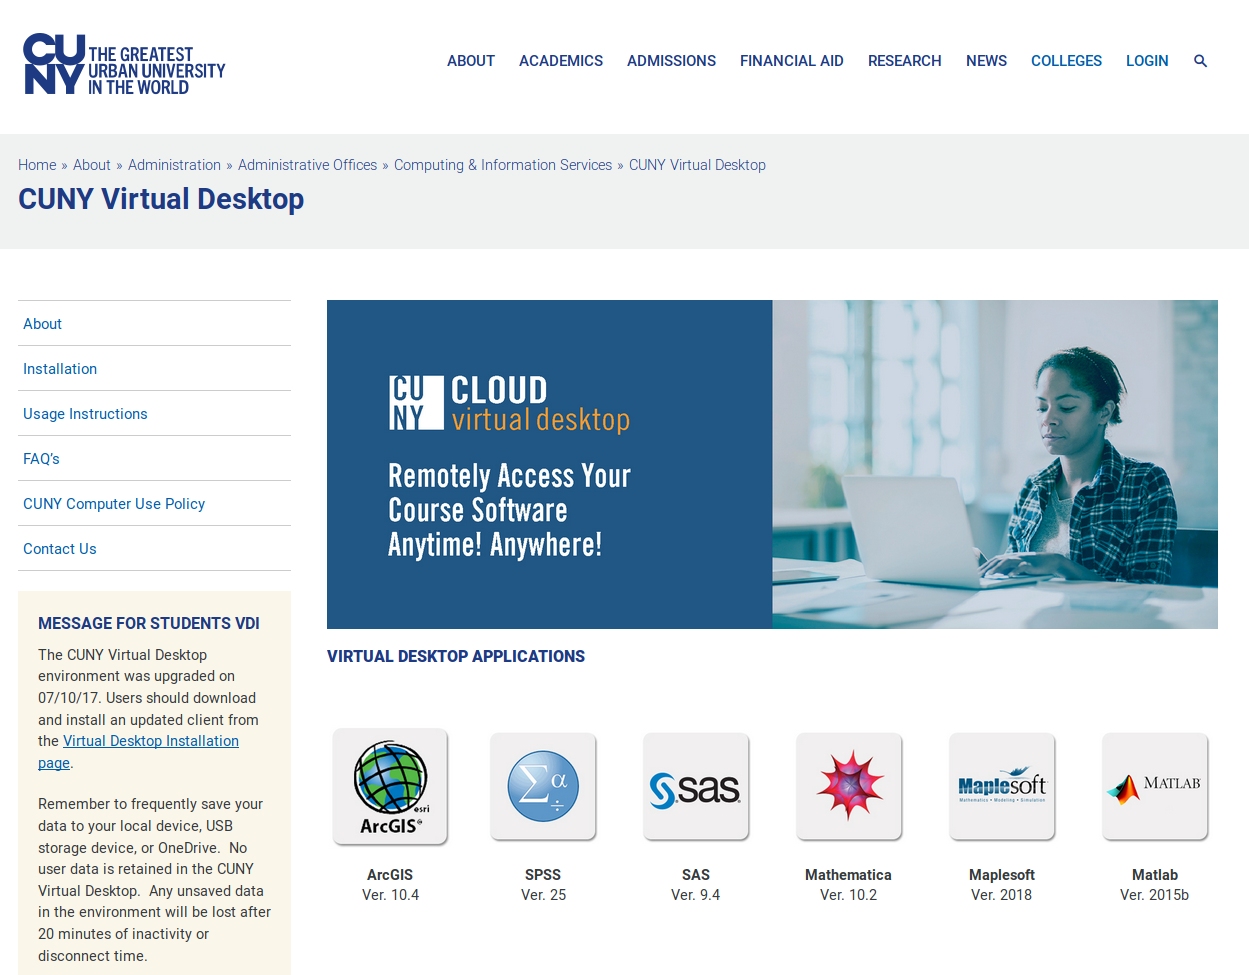 CUNY Virtual Desktop site